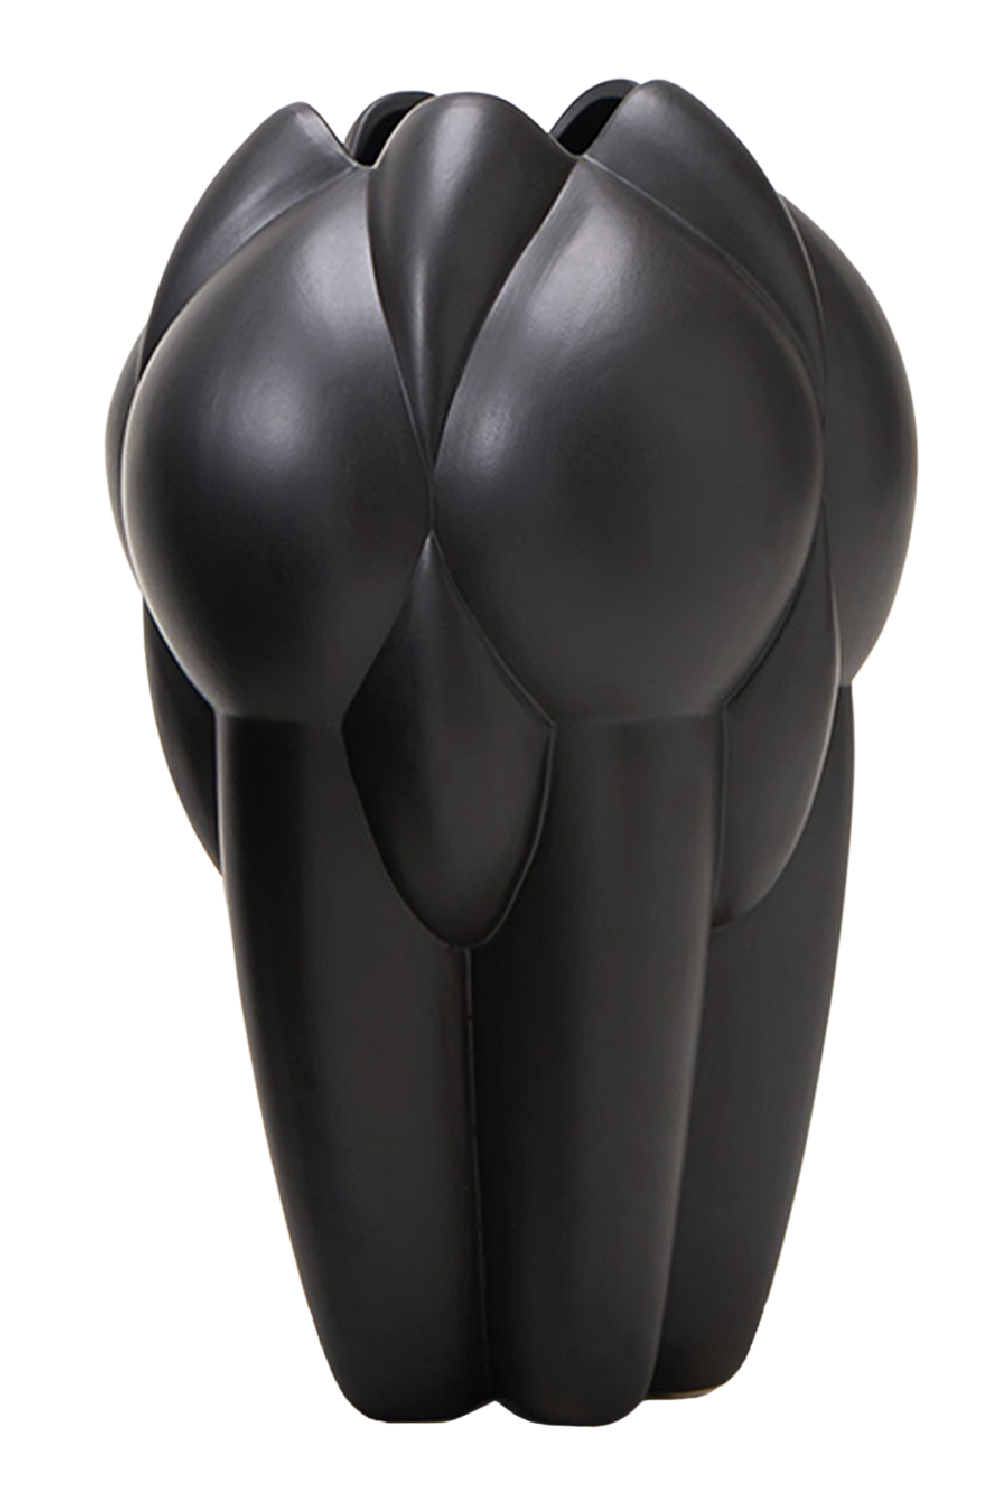 Black Ceramic Modern Vase | Liang & Eimil Lax | Oroa.com